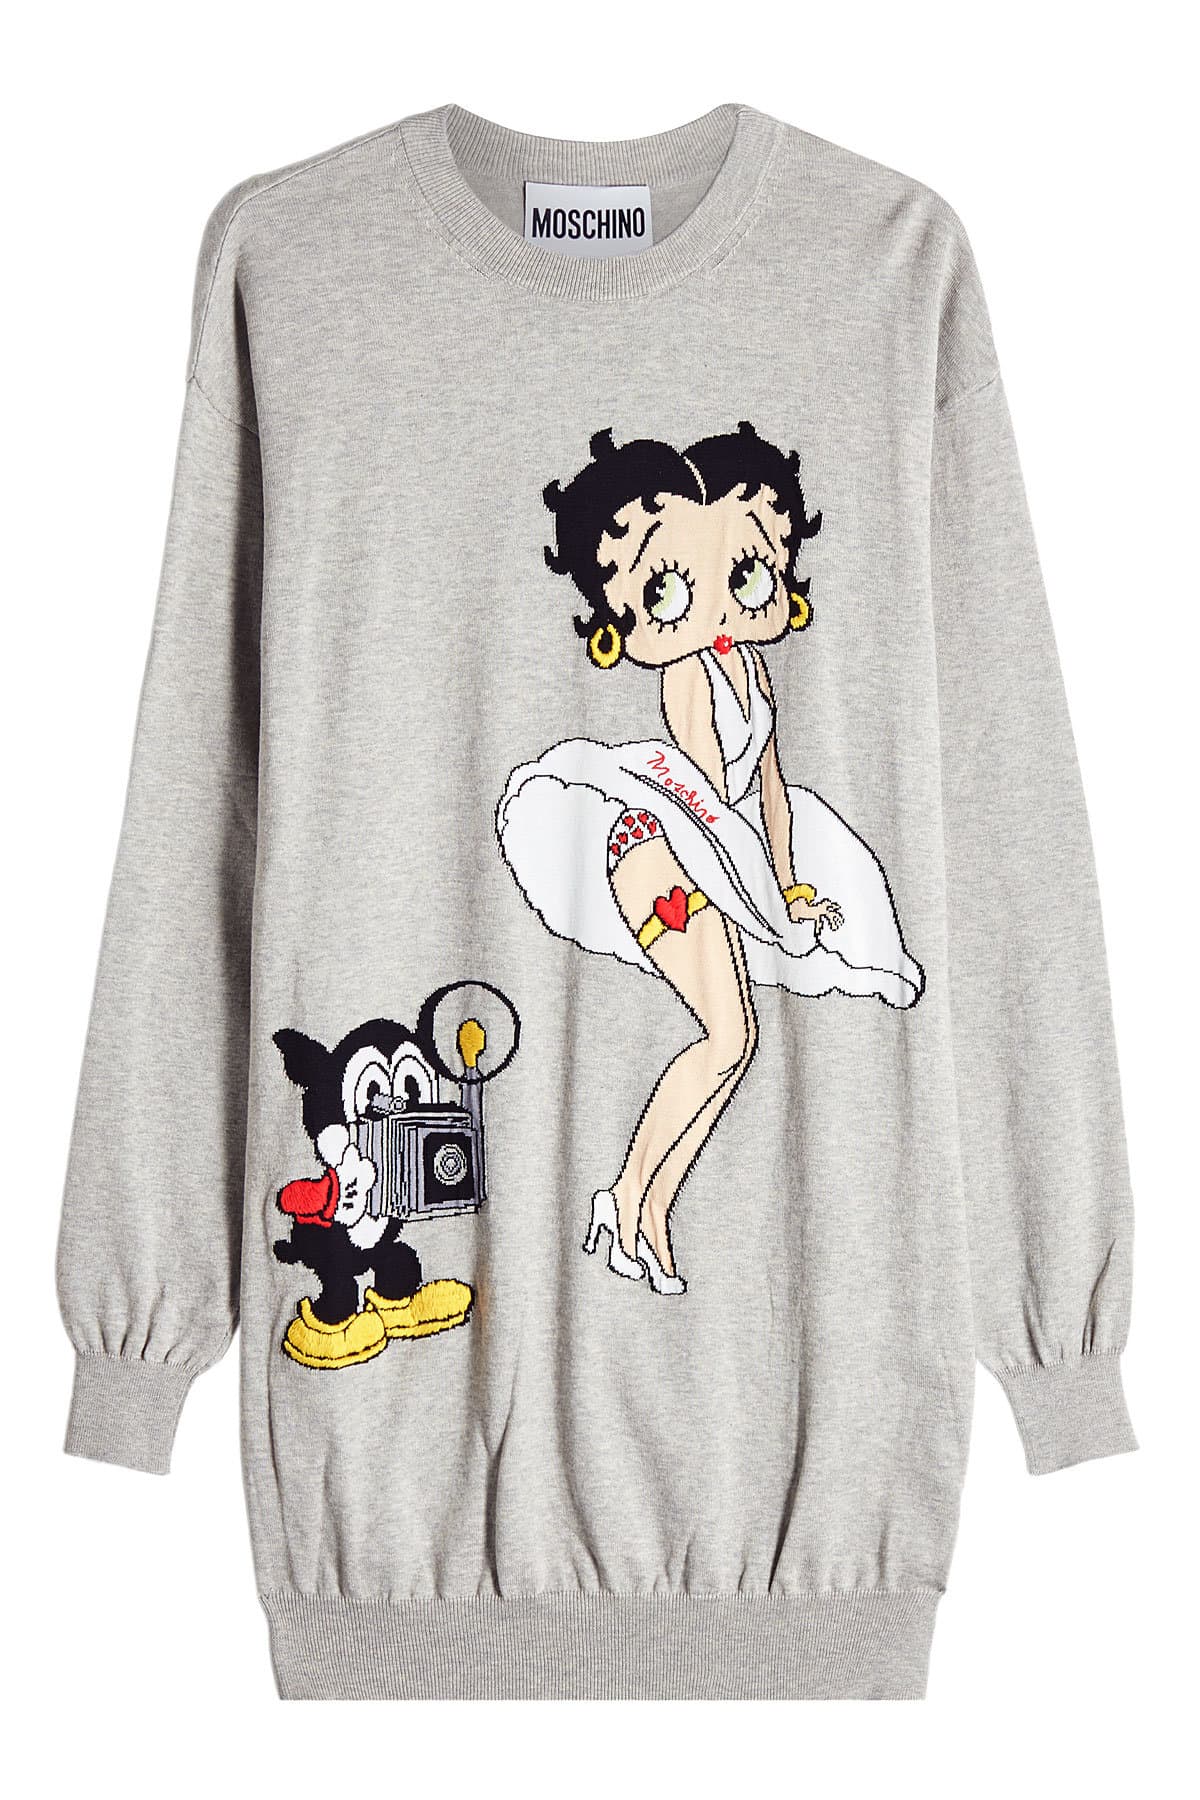 Moschino - Betty Boop Sweater